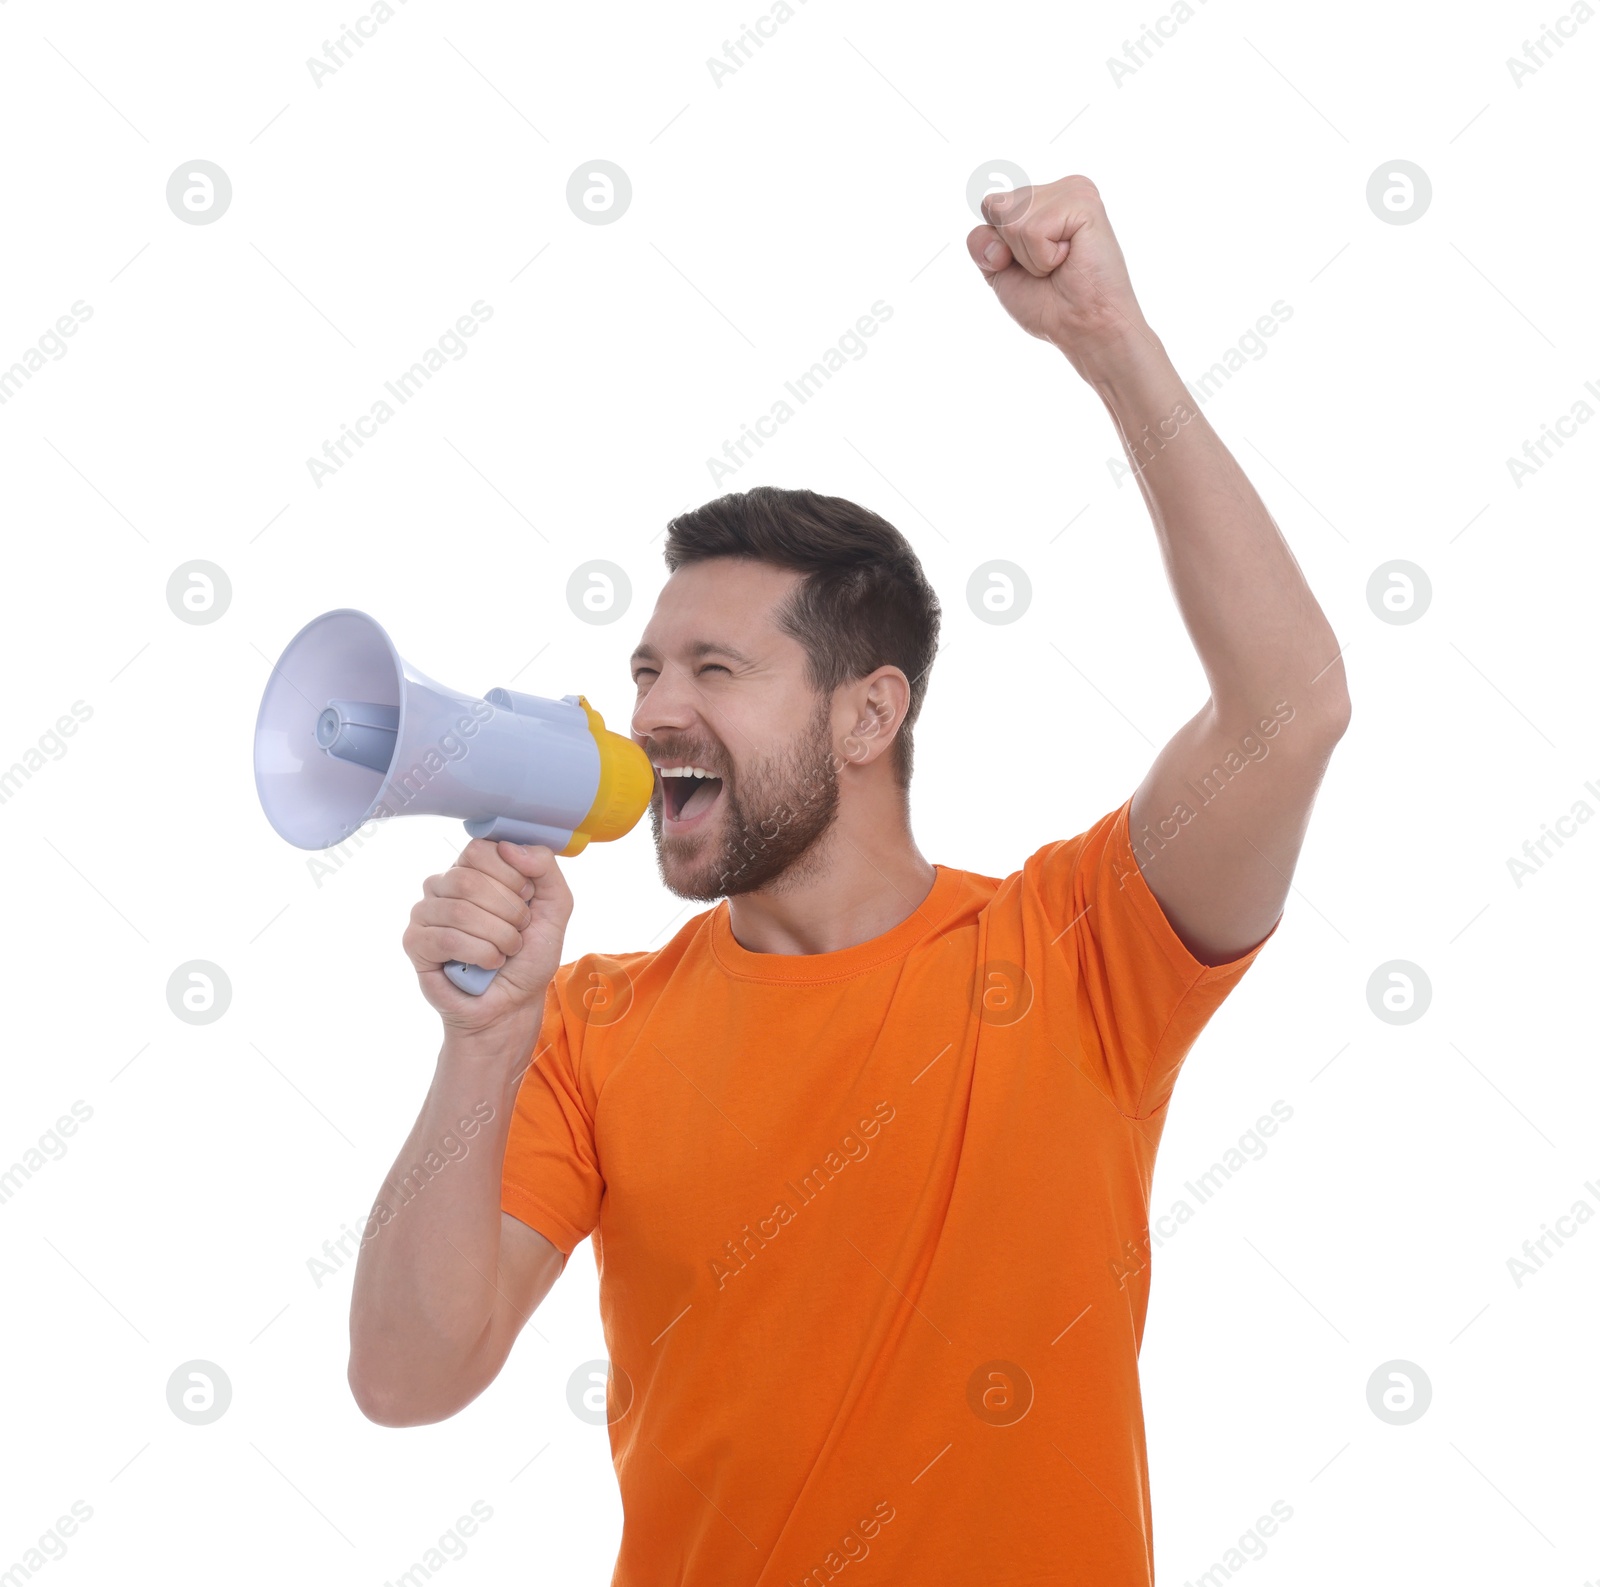 Photo of Emotional sports fan with megaphone celebrating on white background